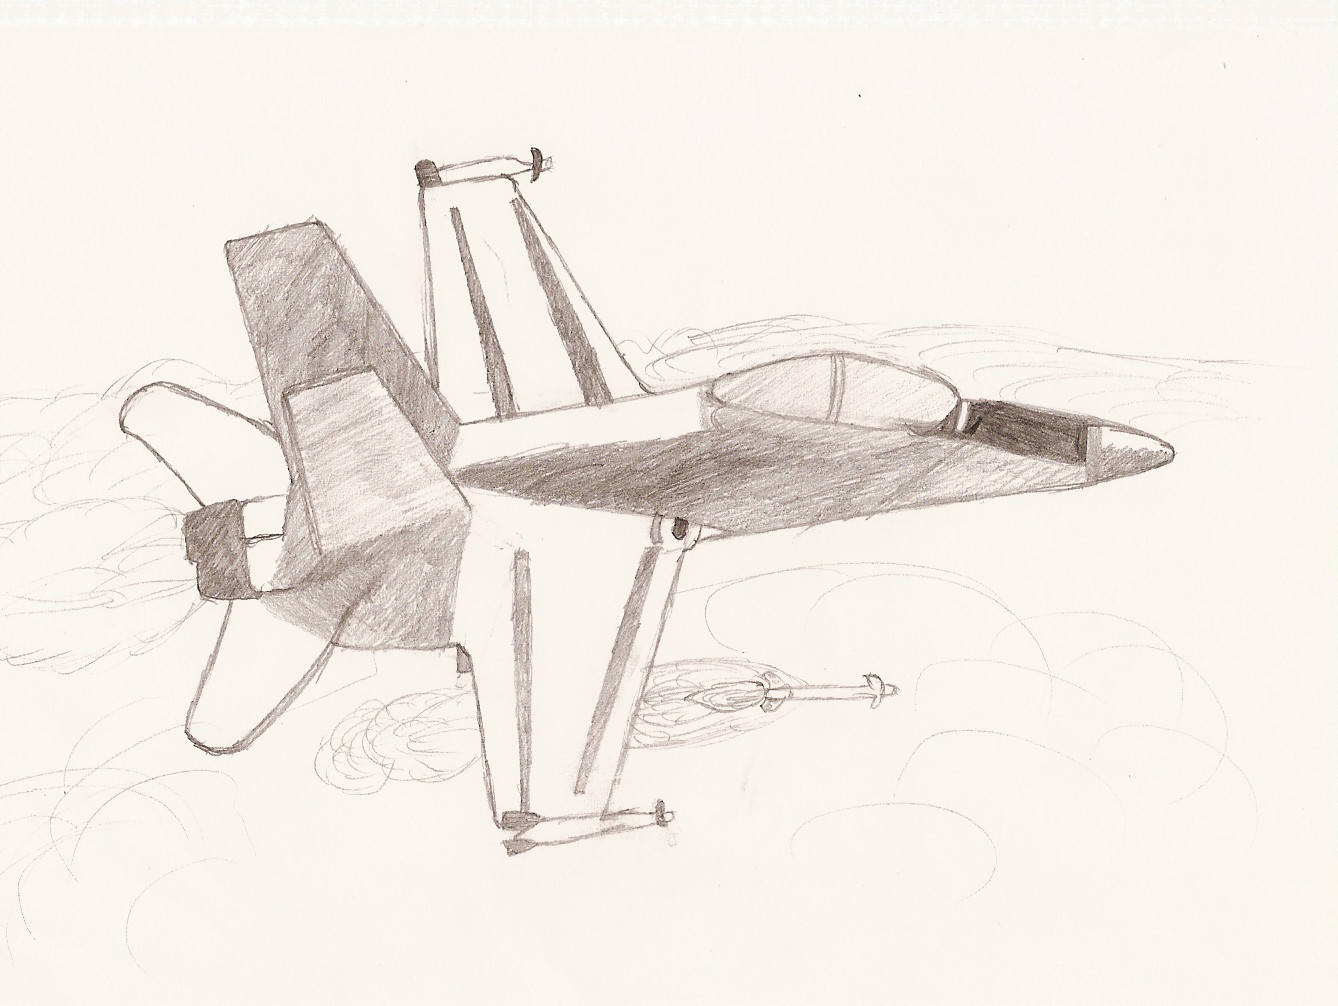 Super Hornet from Fallen Angel by RustyMagnum